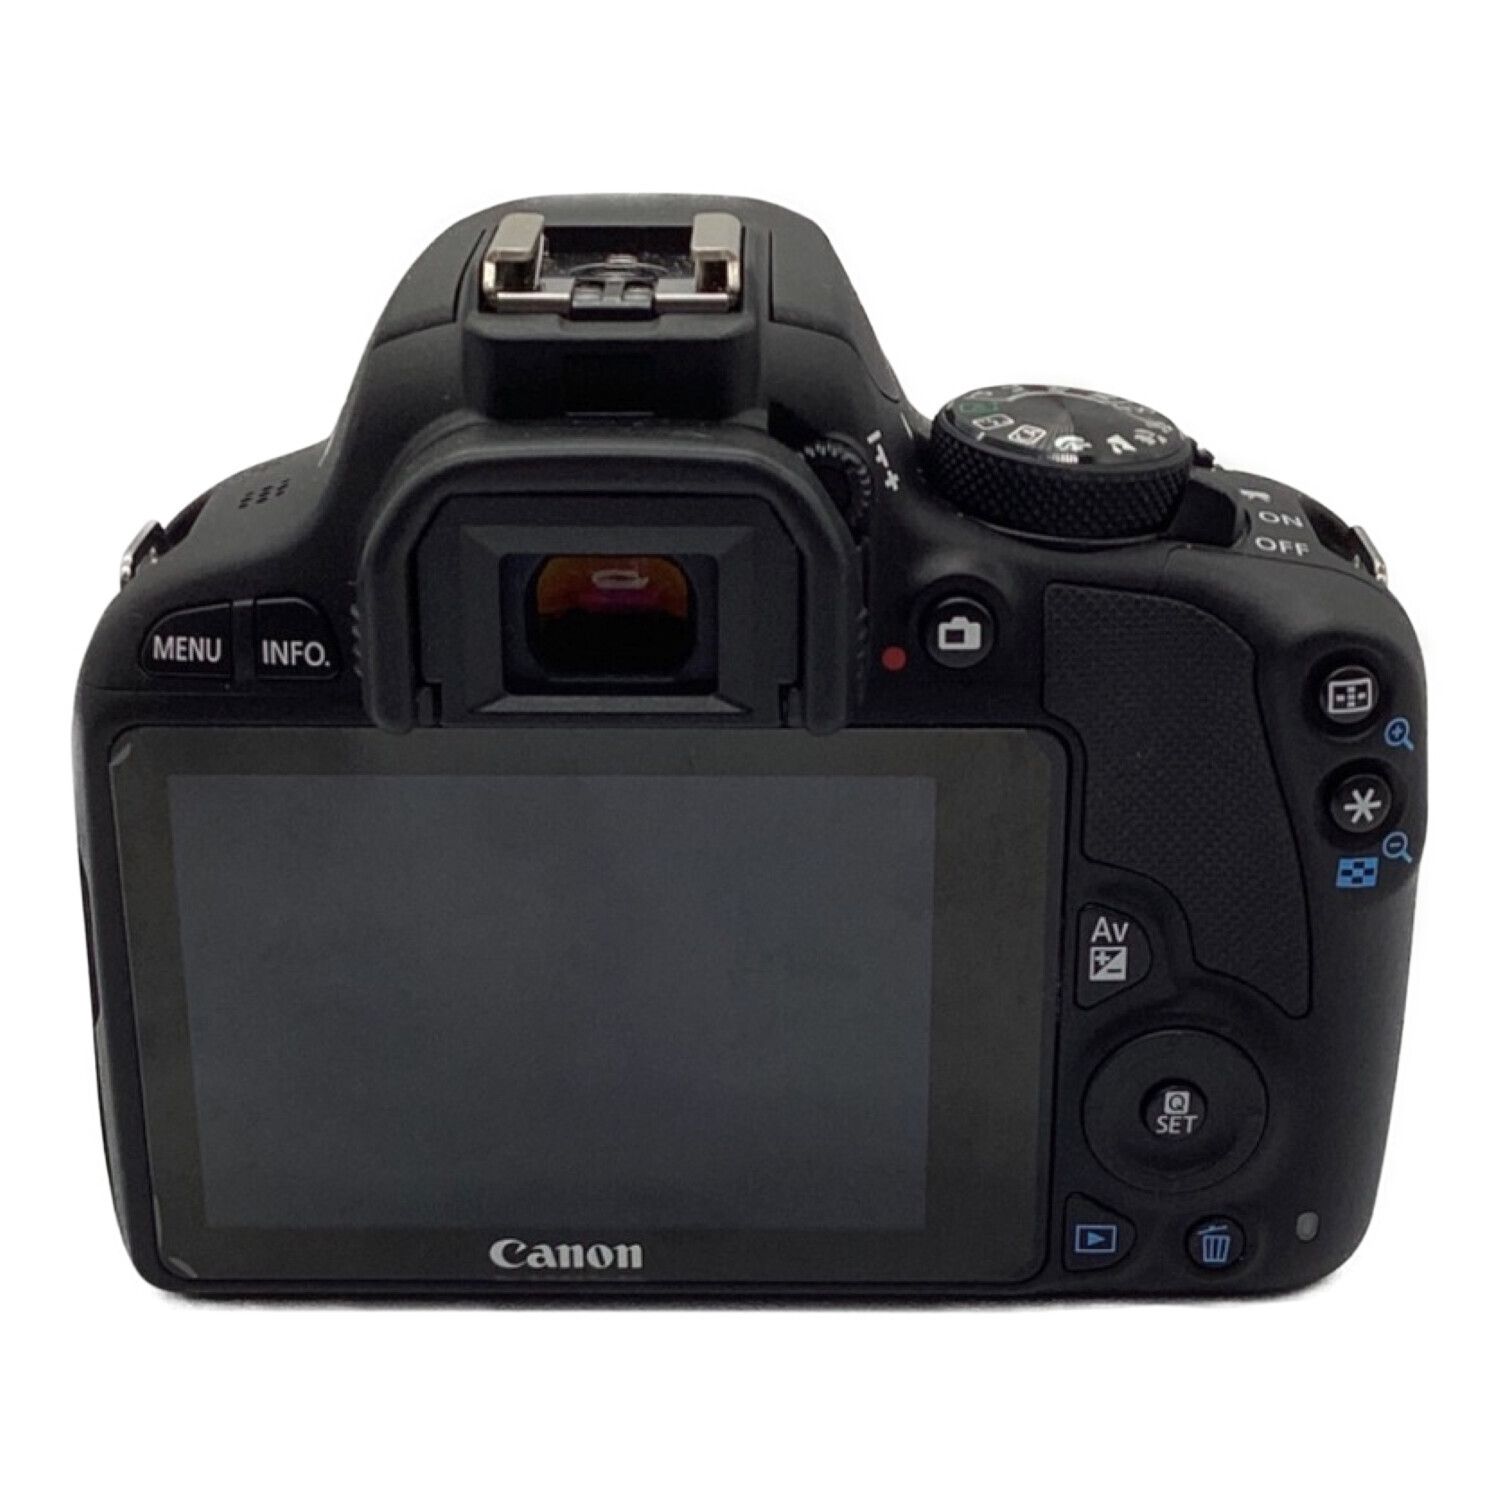 CANON (キャノン) デジタル一眼レフカメラ EOS KISS X7 1800万画素 